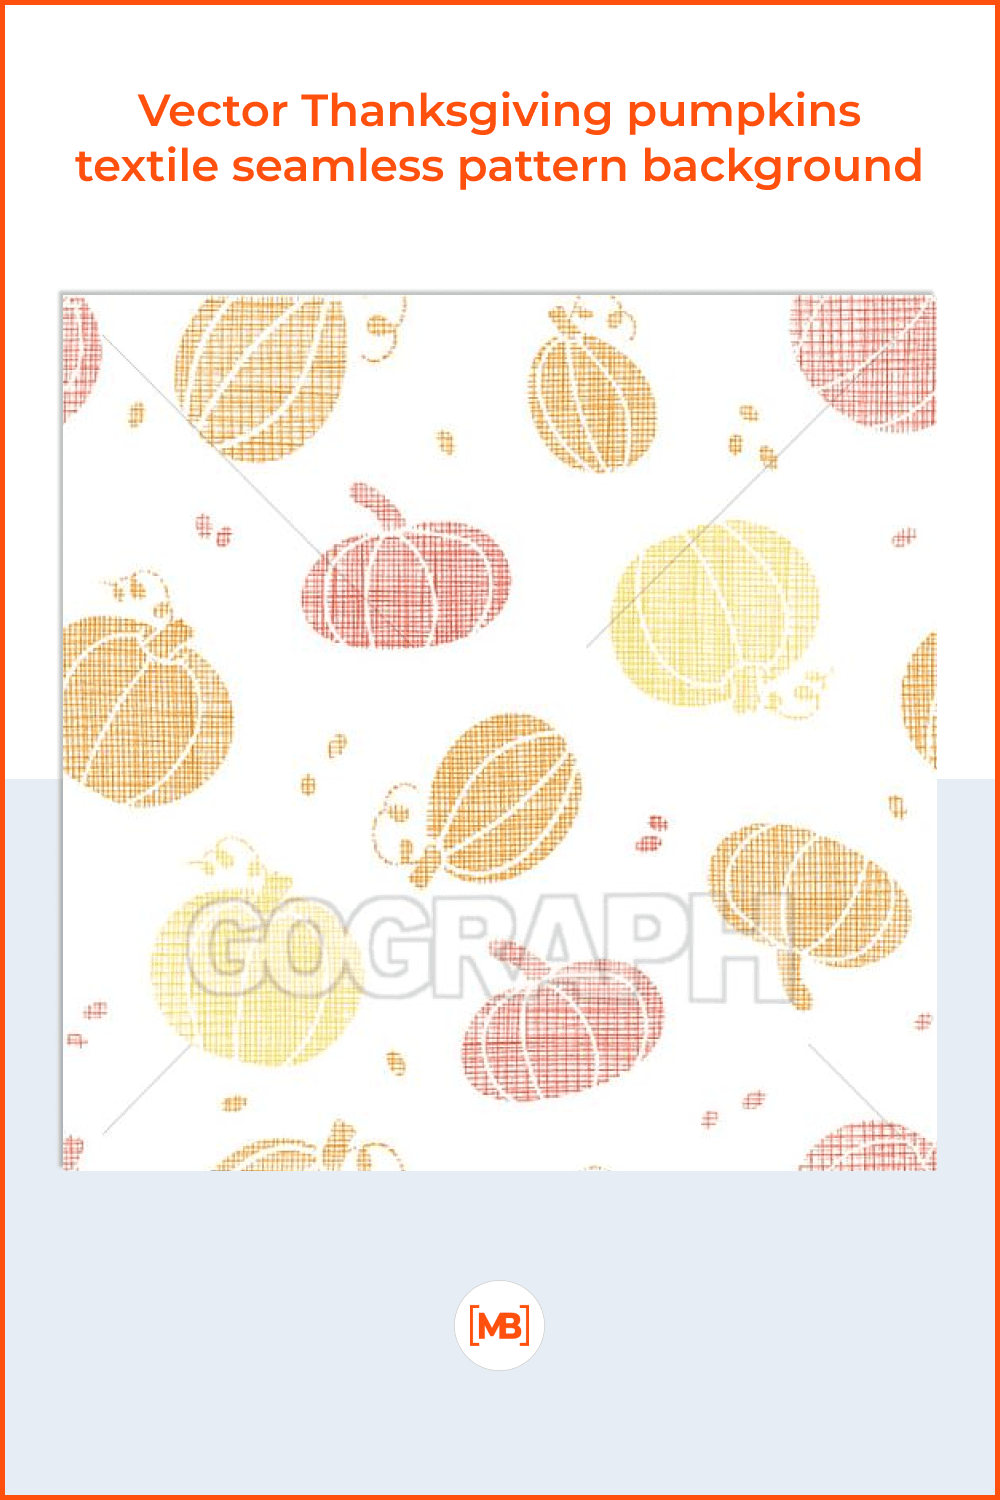 Vector Thanksgiving pumpkins textile seamless pattern background.